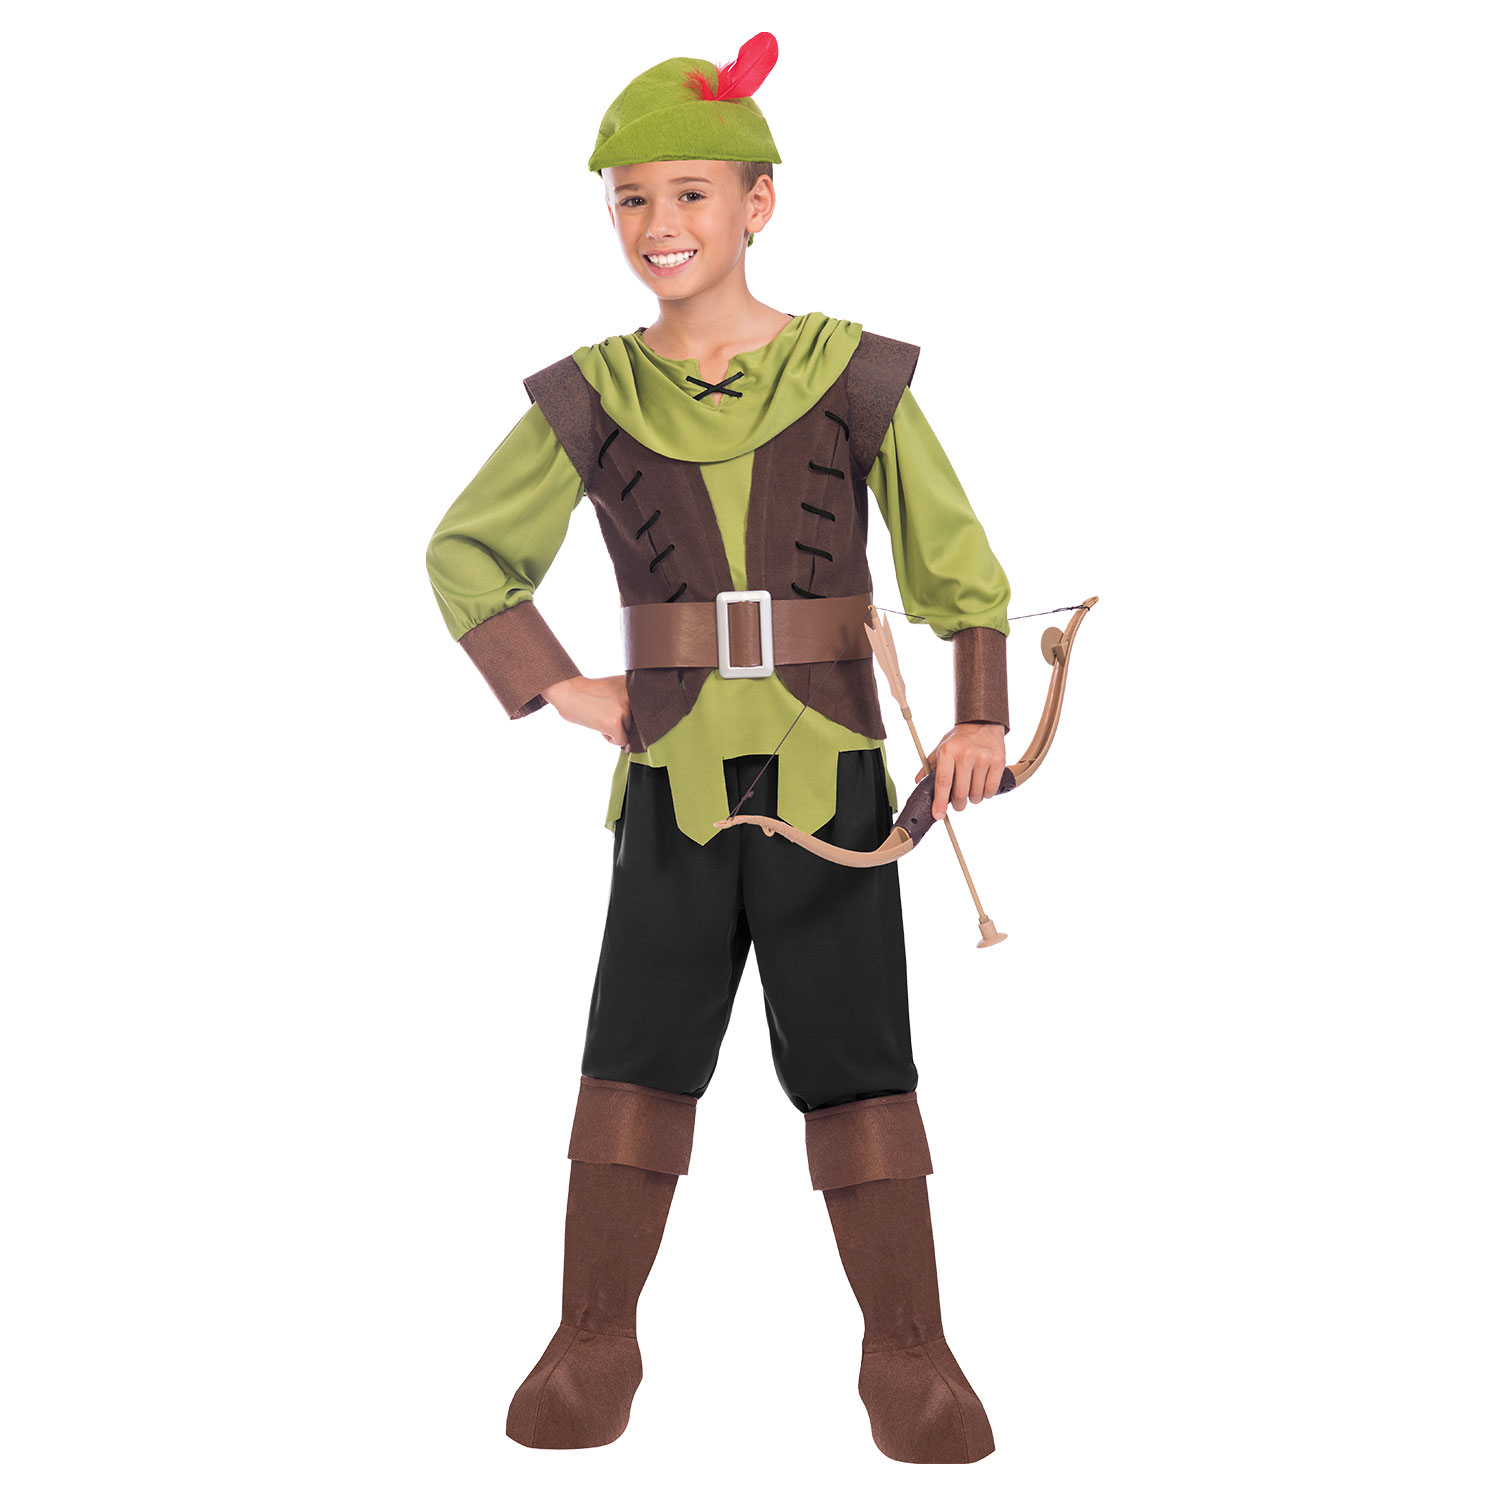 Robin Hood Costume - Age 10-12 Years - 1 PC : Amscan International